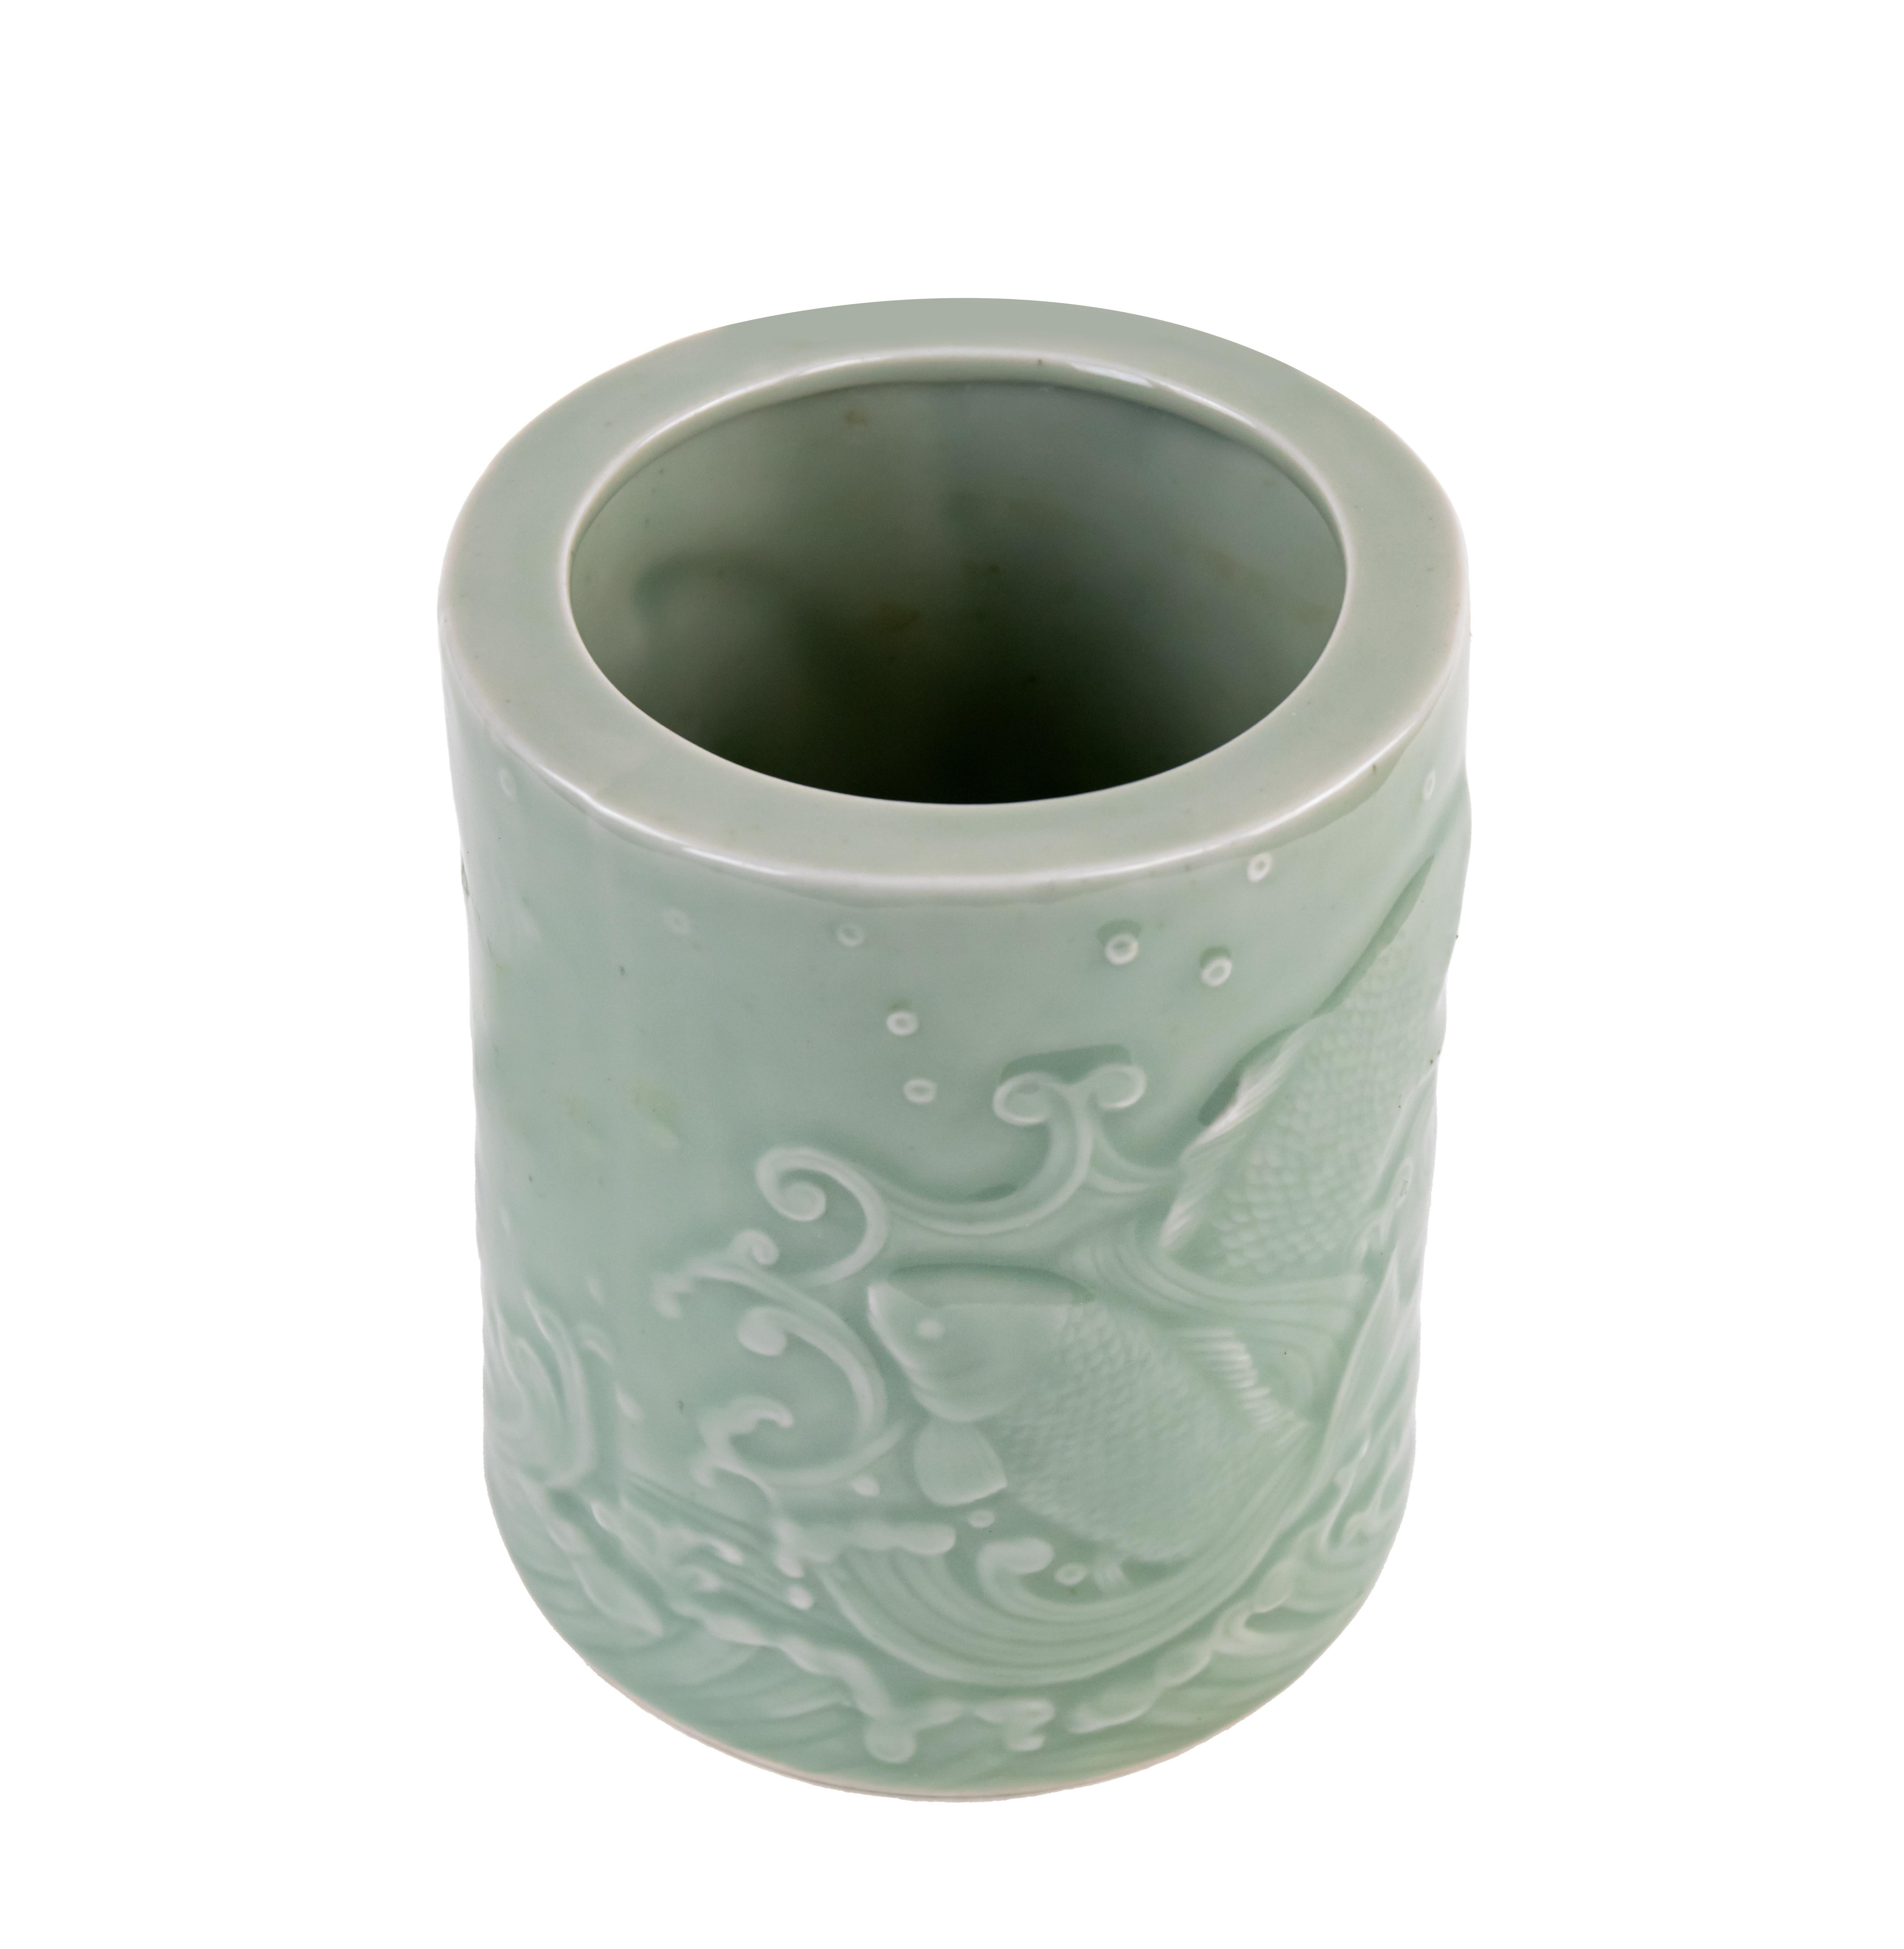 Chinese celadon enamel porcelain brush pot decorated with vegetal engravings.